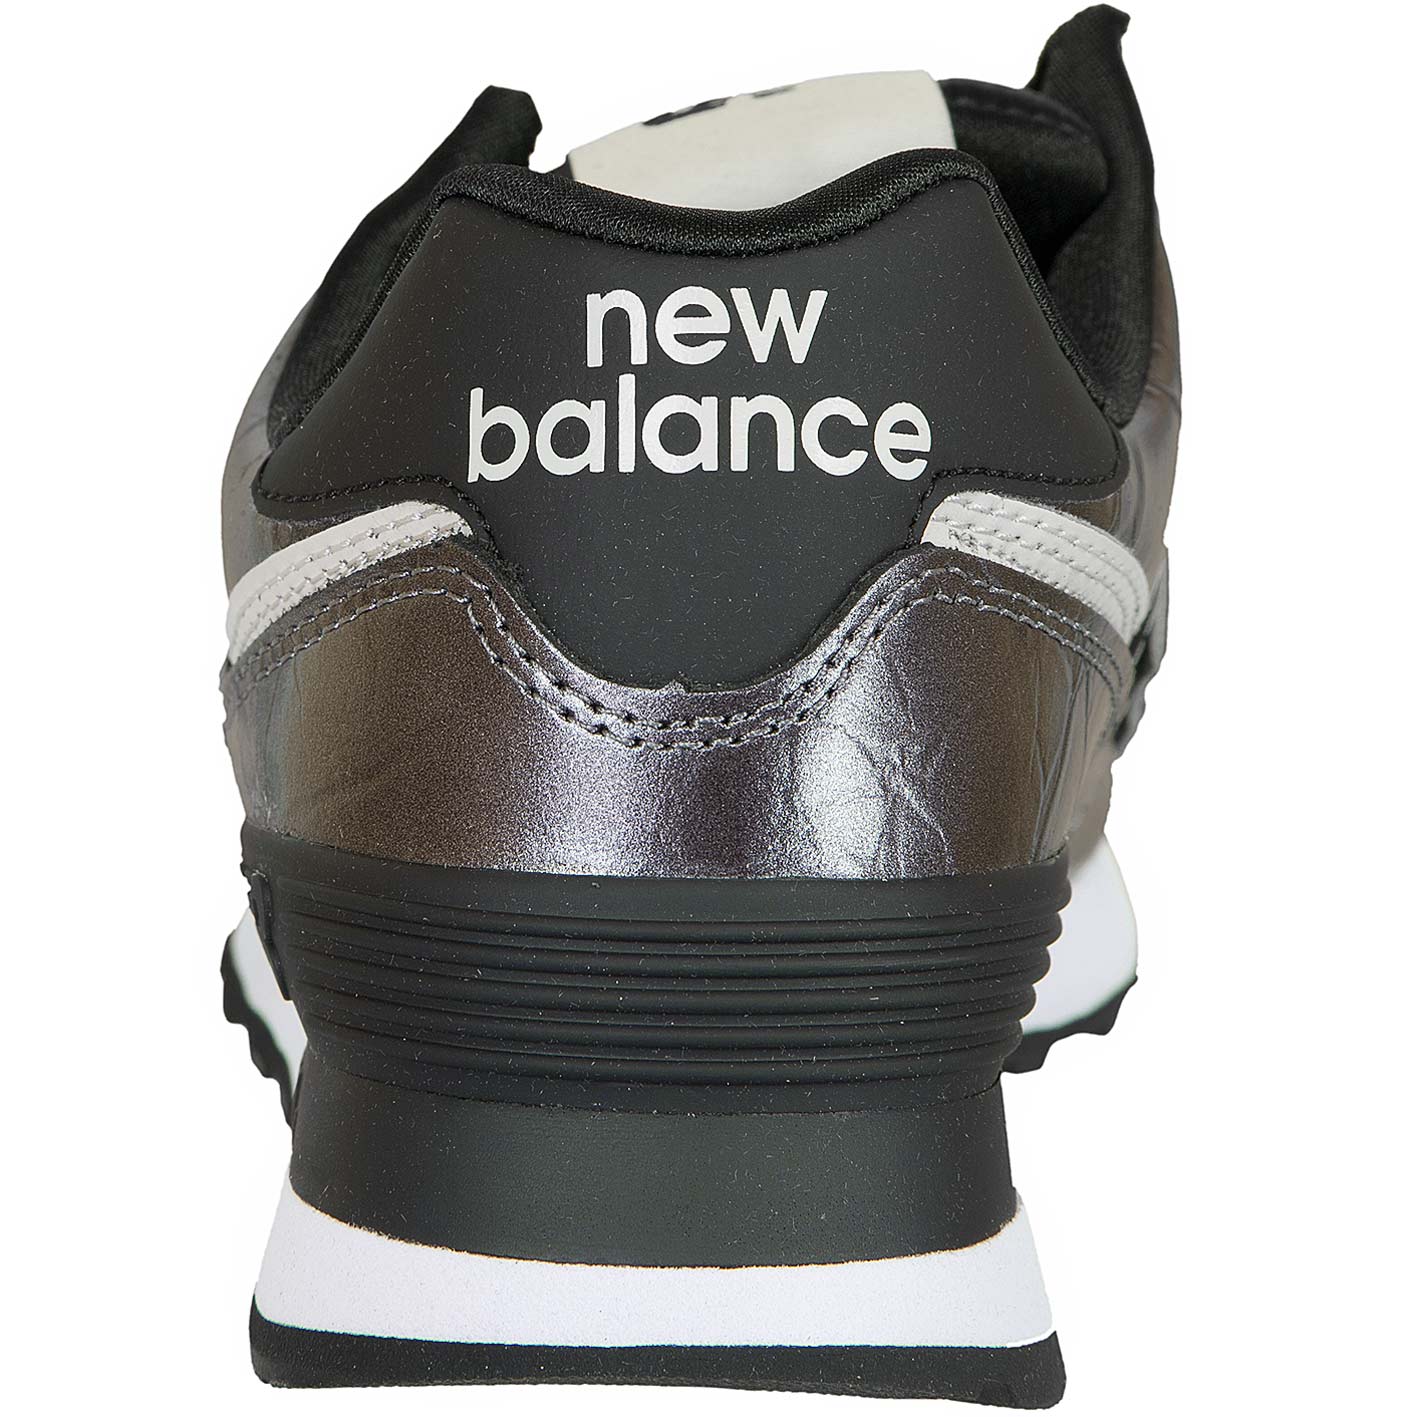 ☆ New Balance Damen Sneaker 574 schwarz - hier bestellen!